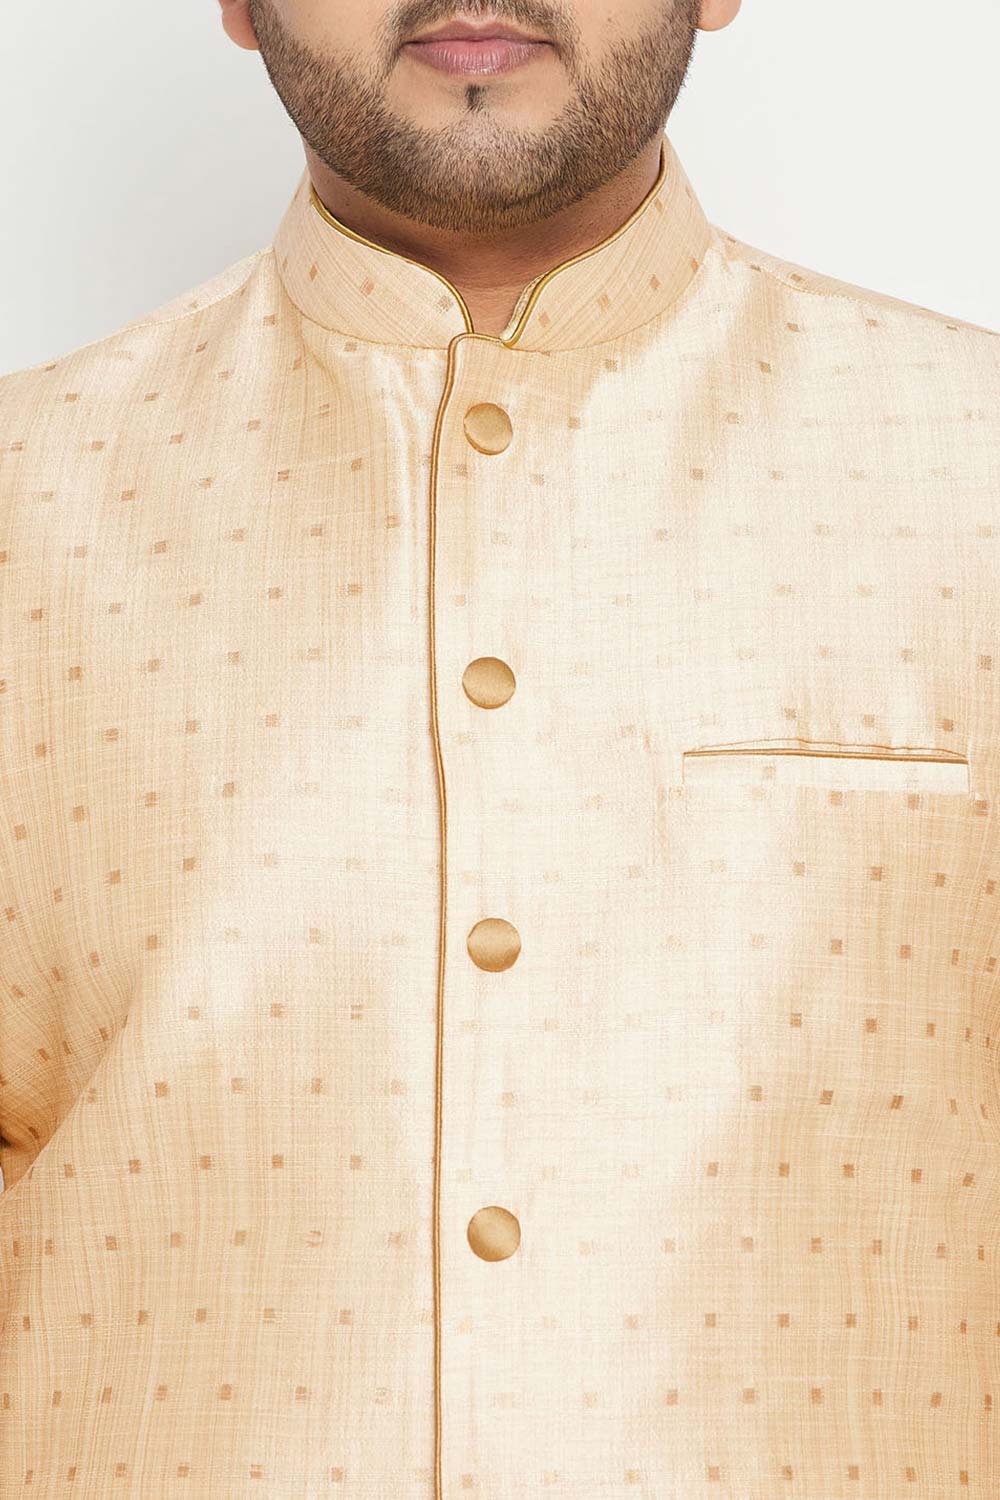 Buy Men's Silk Blend Woven Design Nehru Jacket in Gold - Zoom in